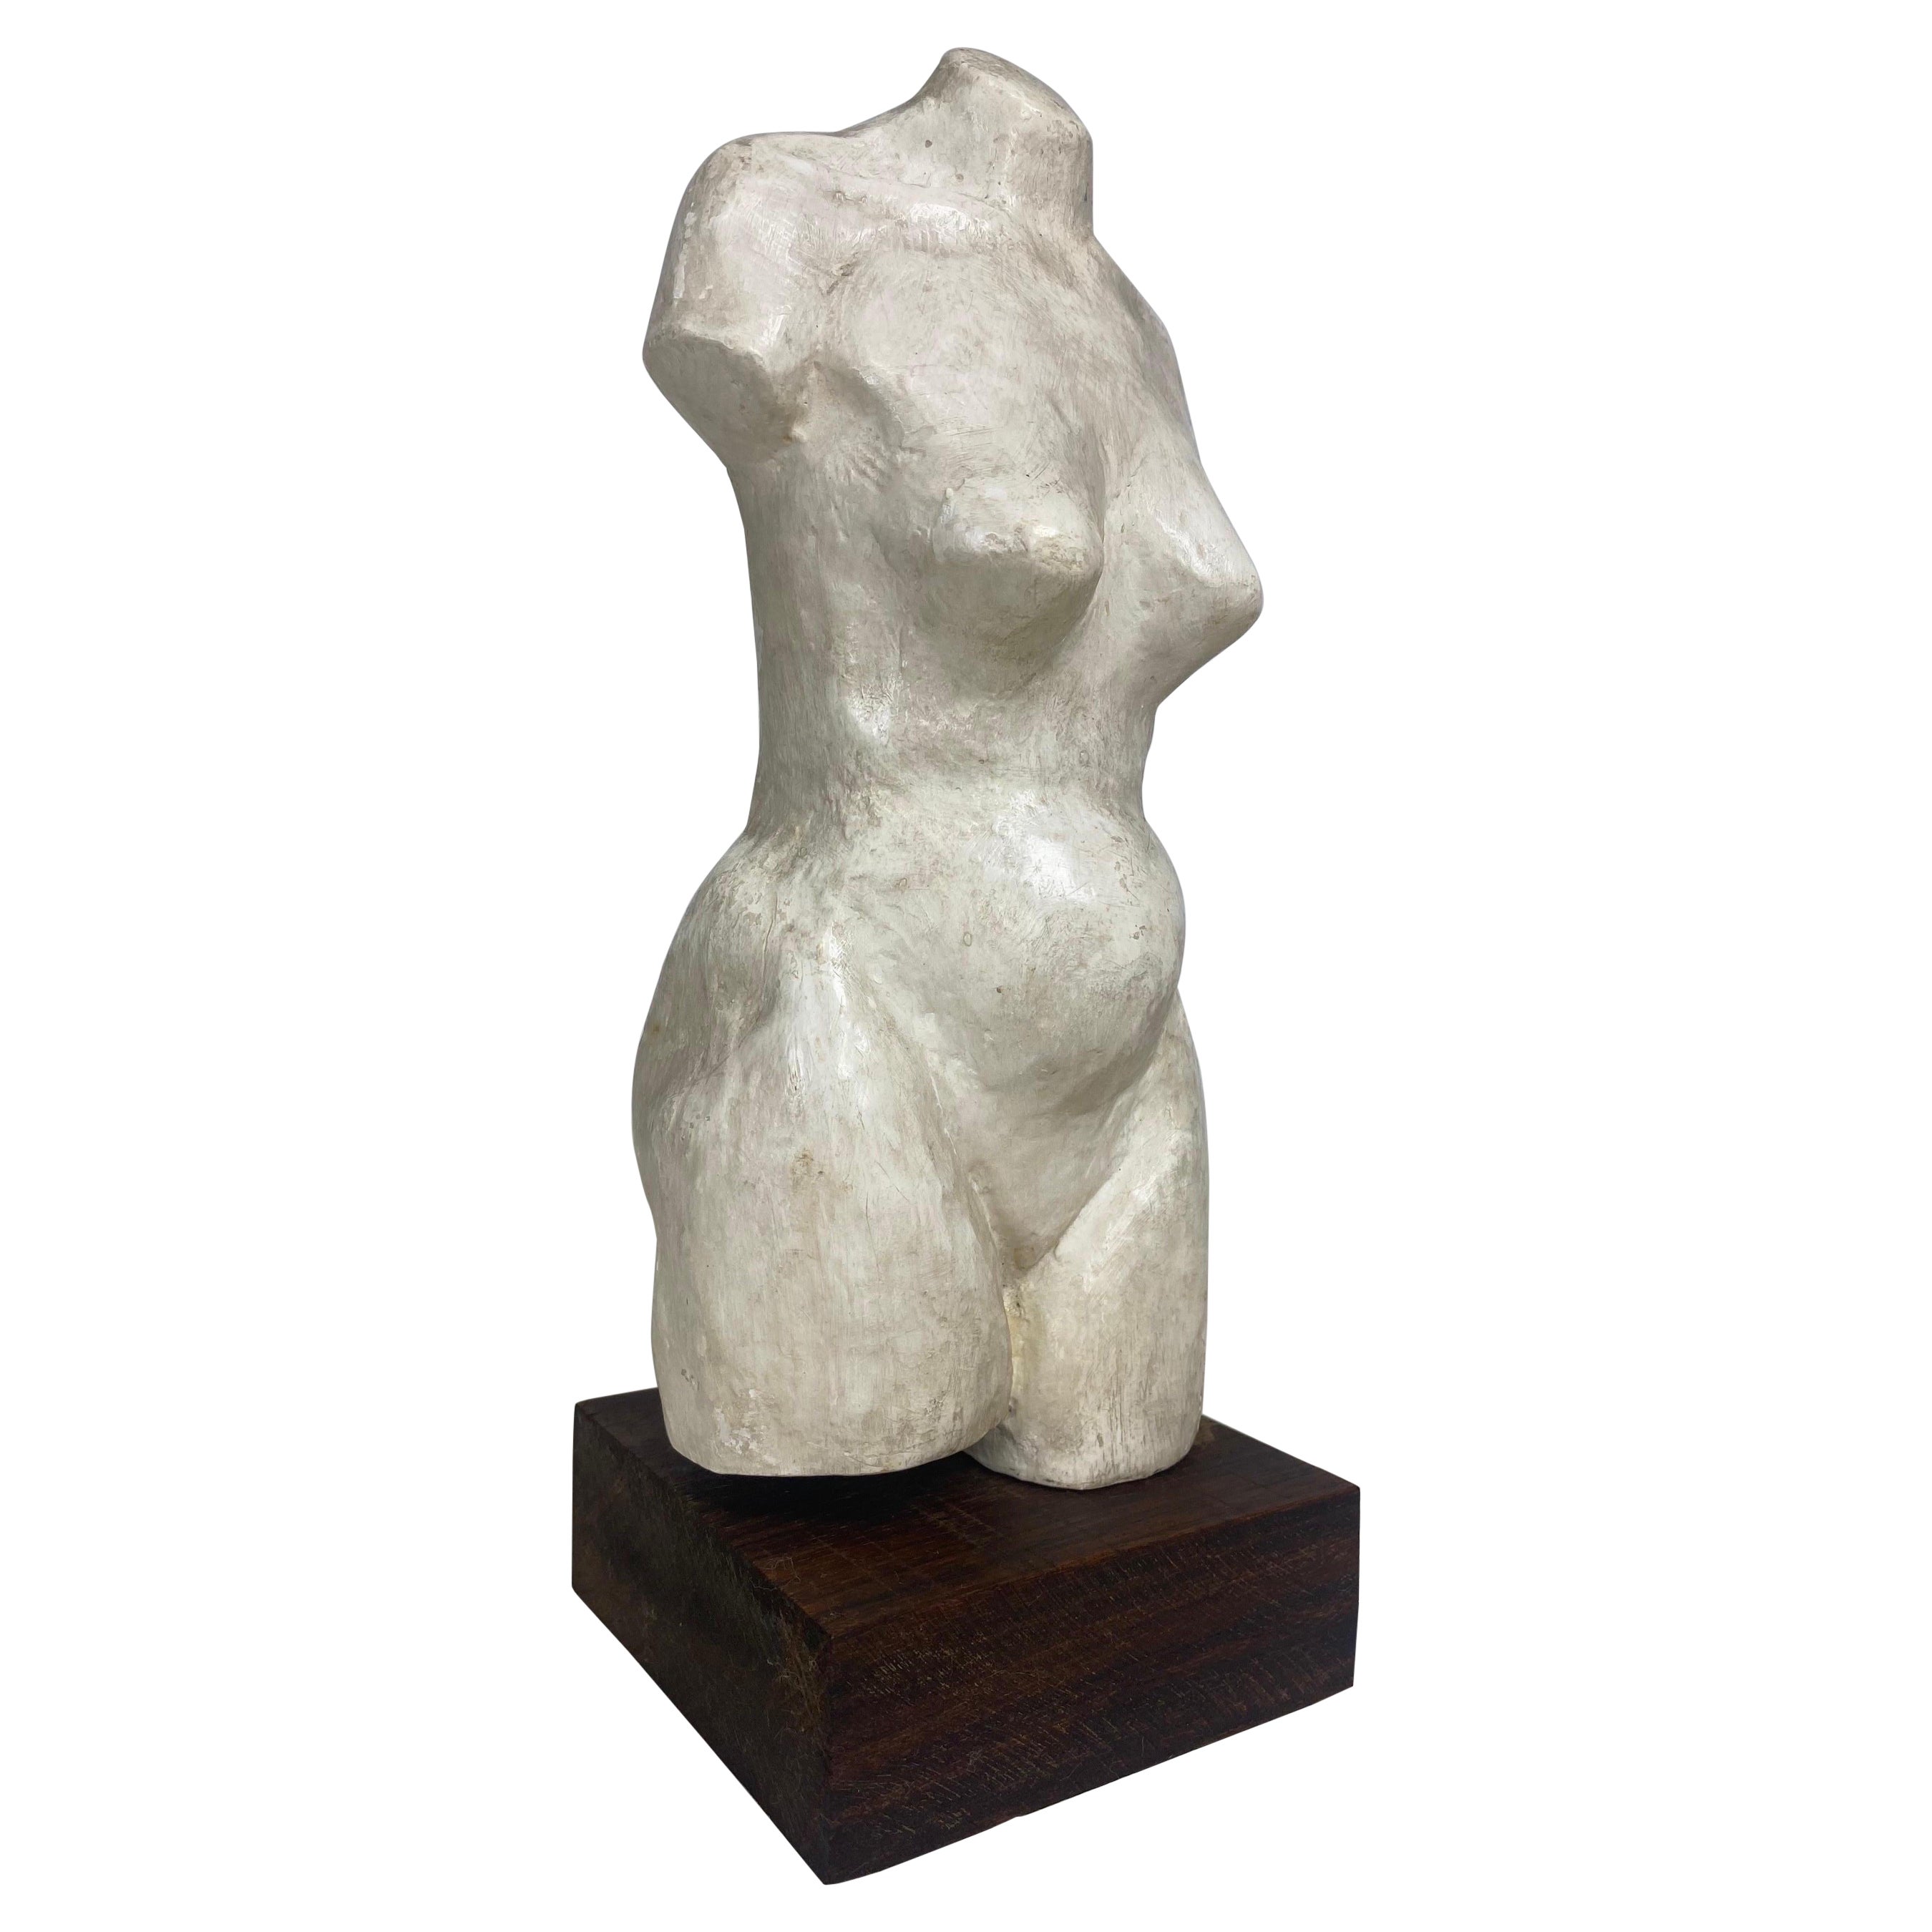 Mid-20th century female nude study plaster sculpture